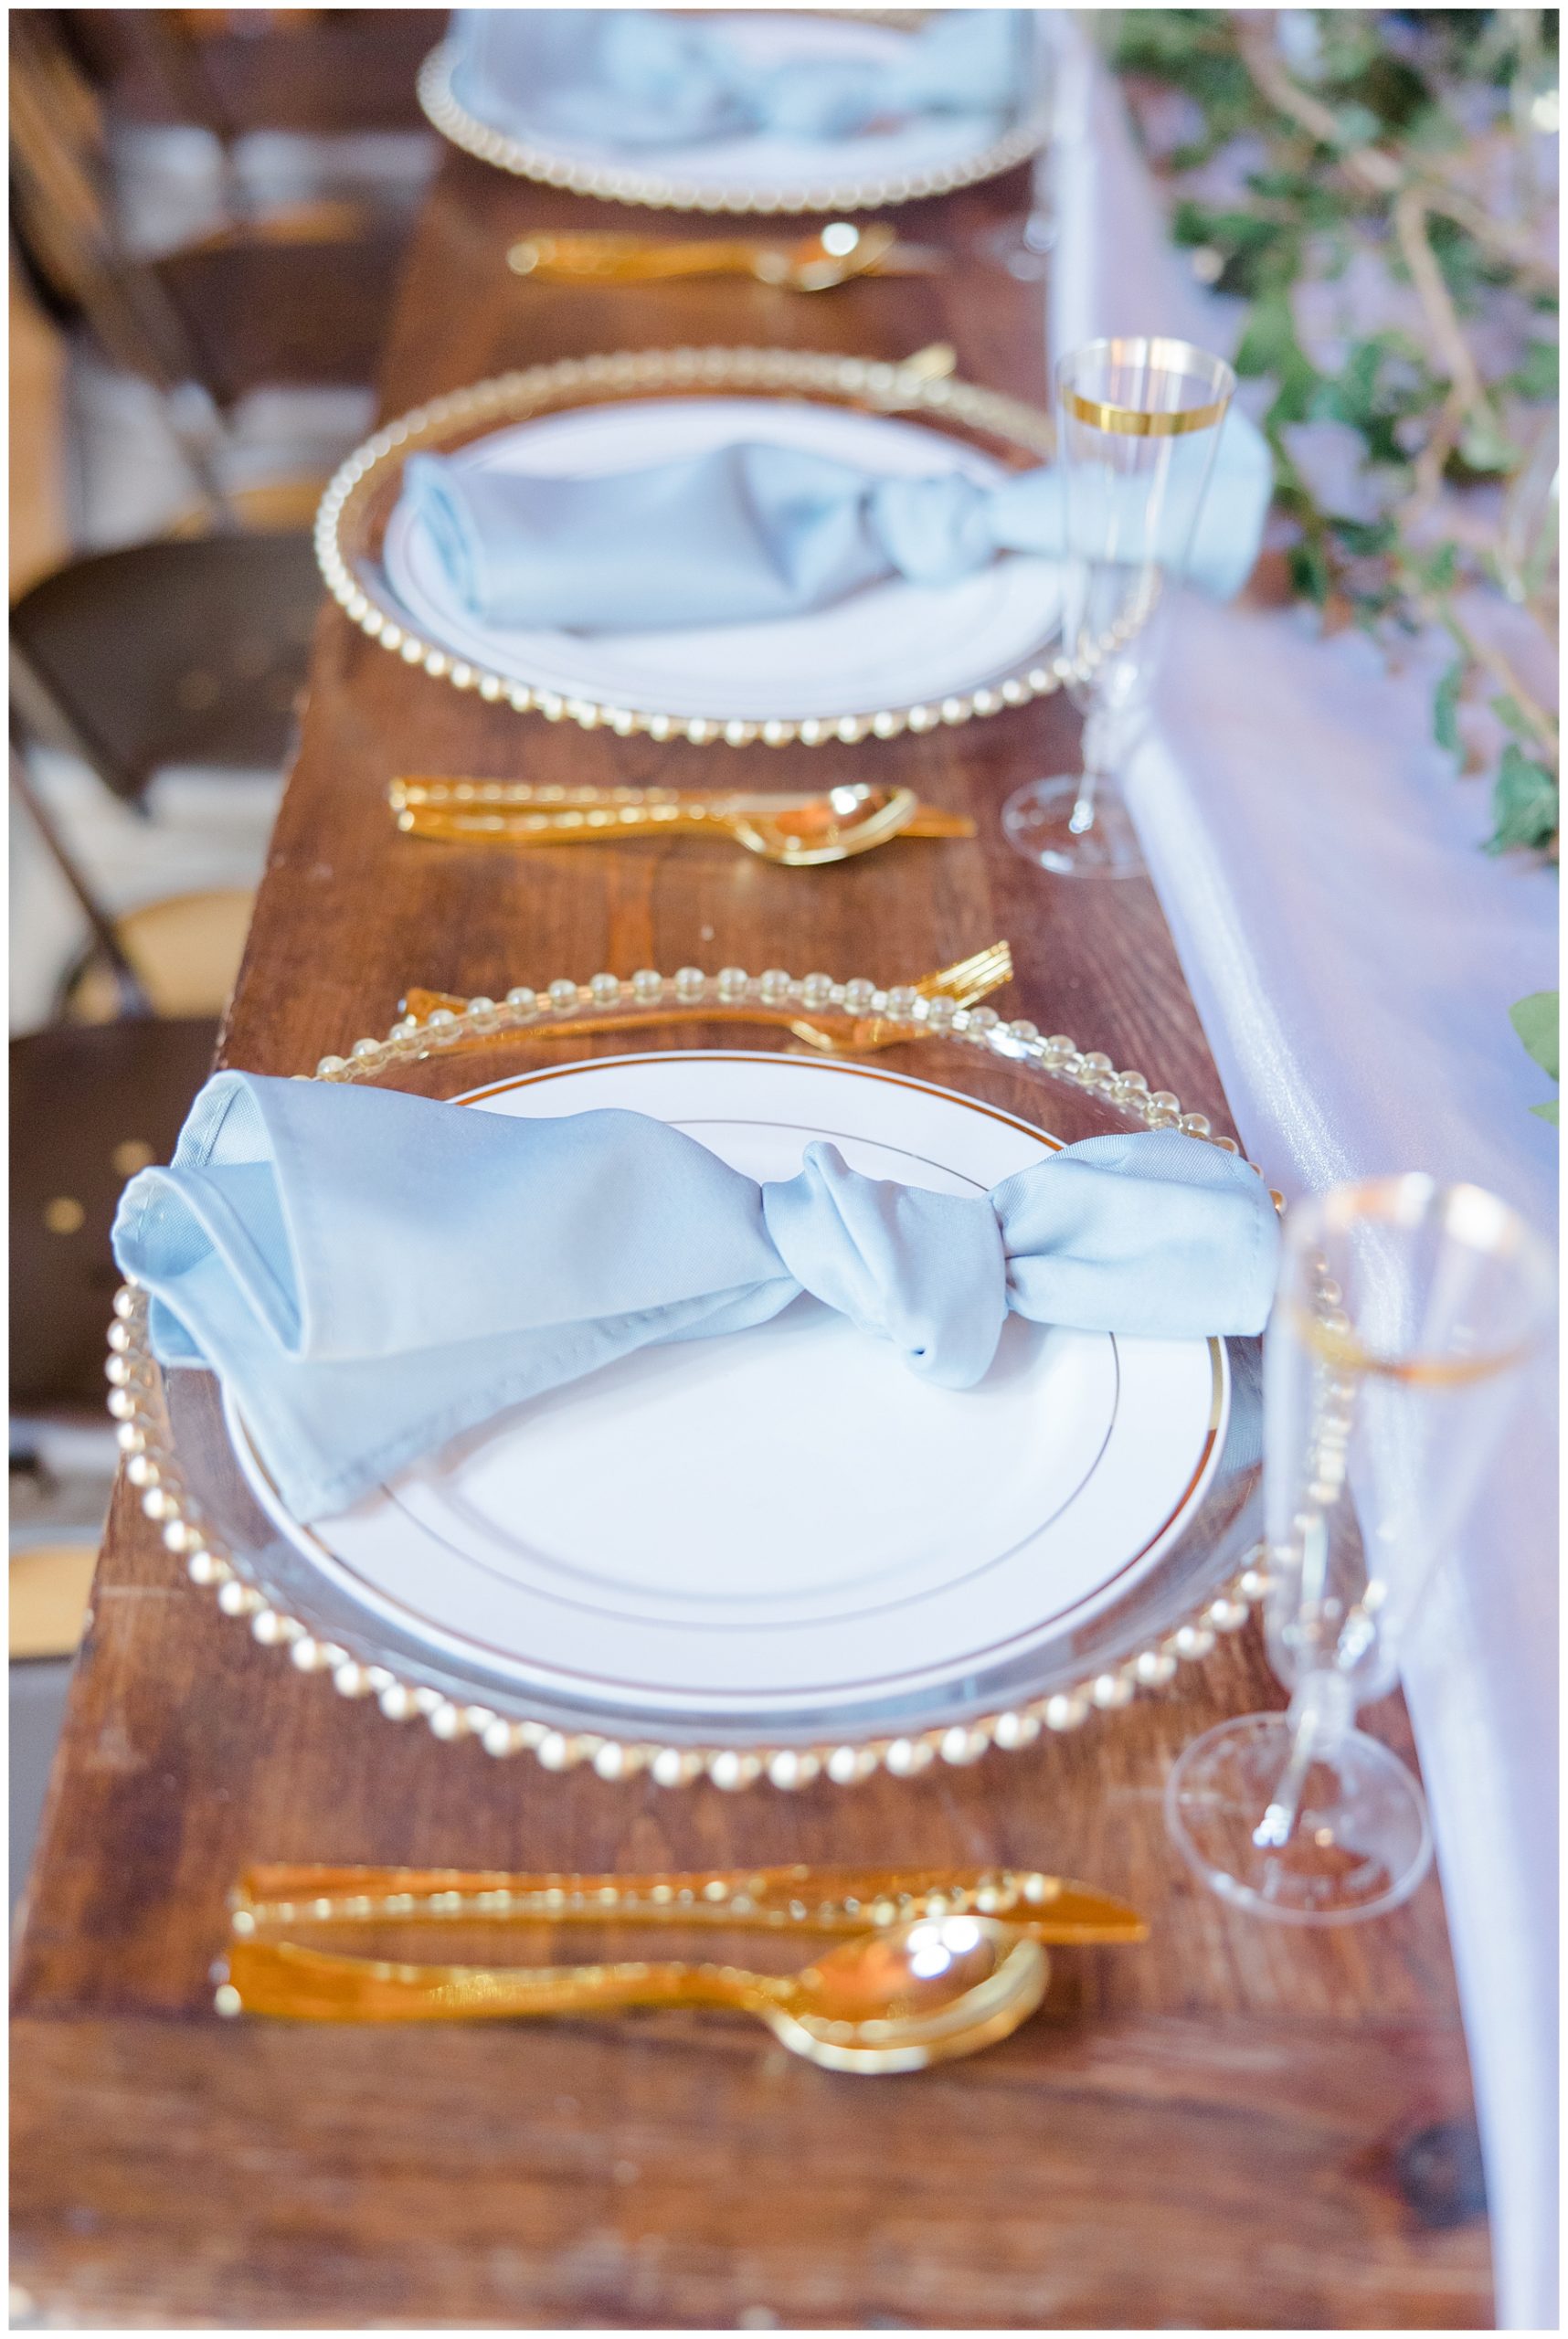 place settings at table during Elegant New Hampshire Wedding reception at The Barn at Powder Major's Farm